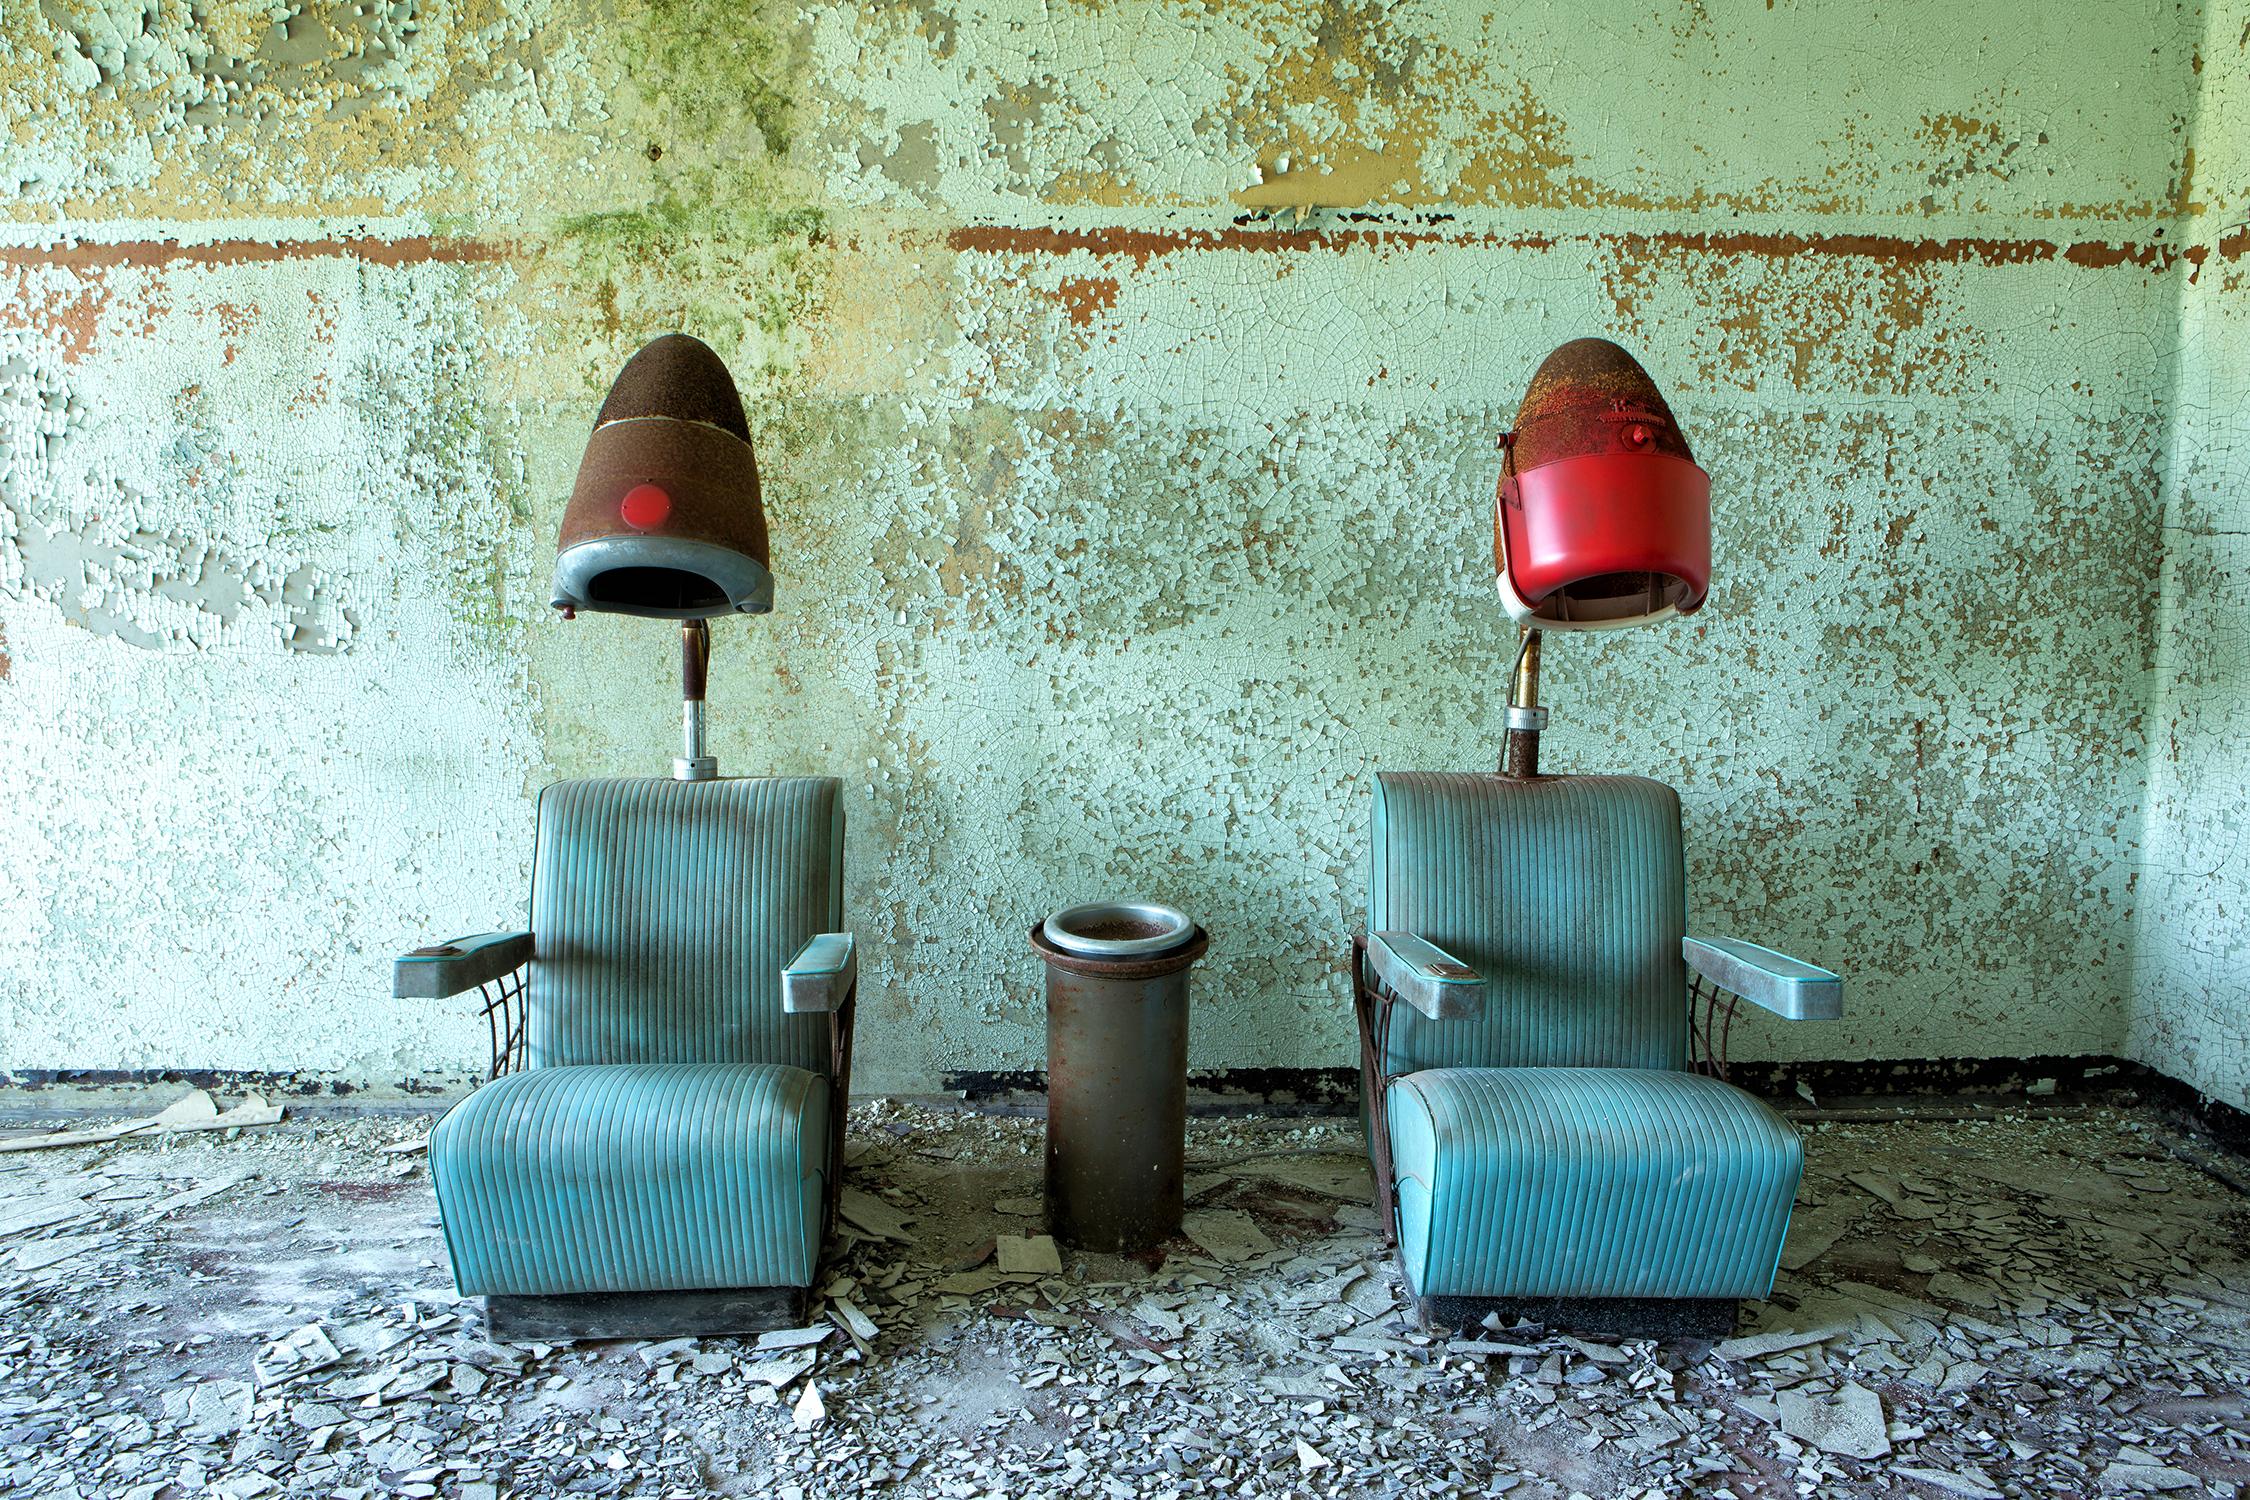 Rebecca Skinner Still-Life Photograph - "Gossip", contemporary, abandoned, salon, vintage, blue, green, color photograph